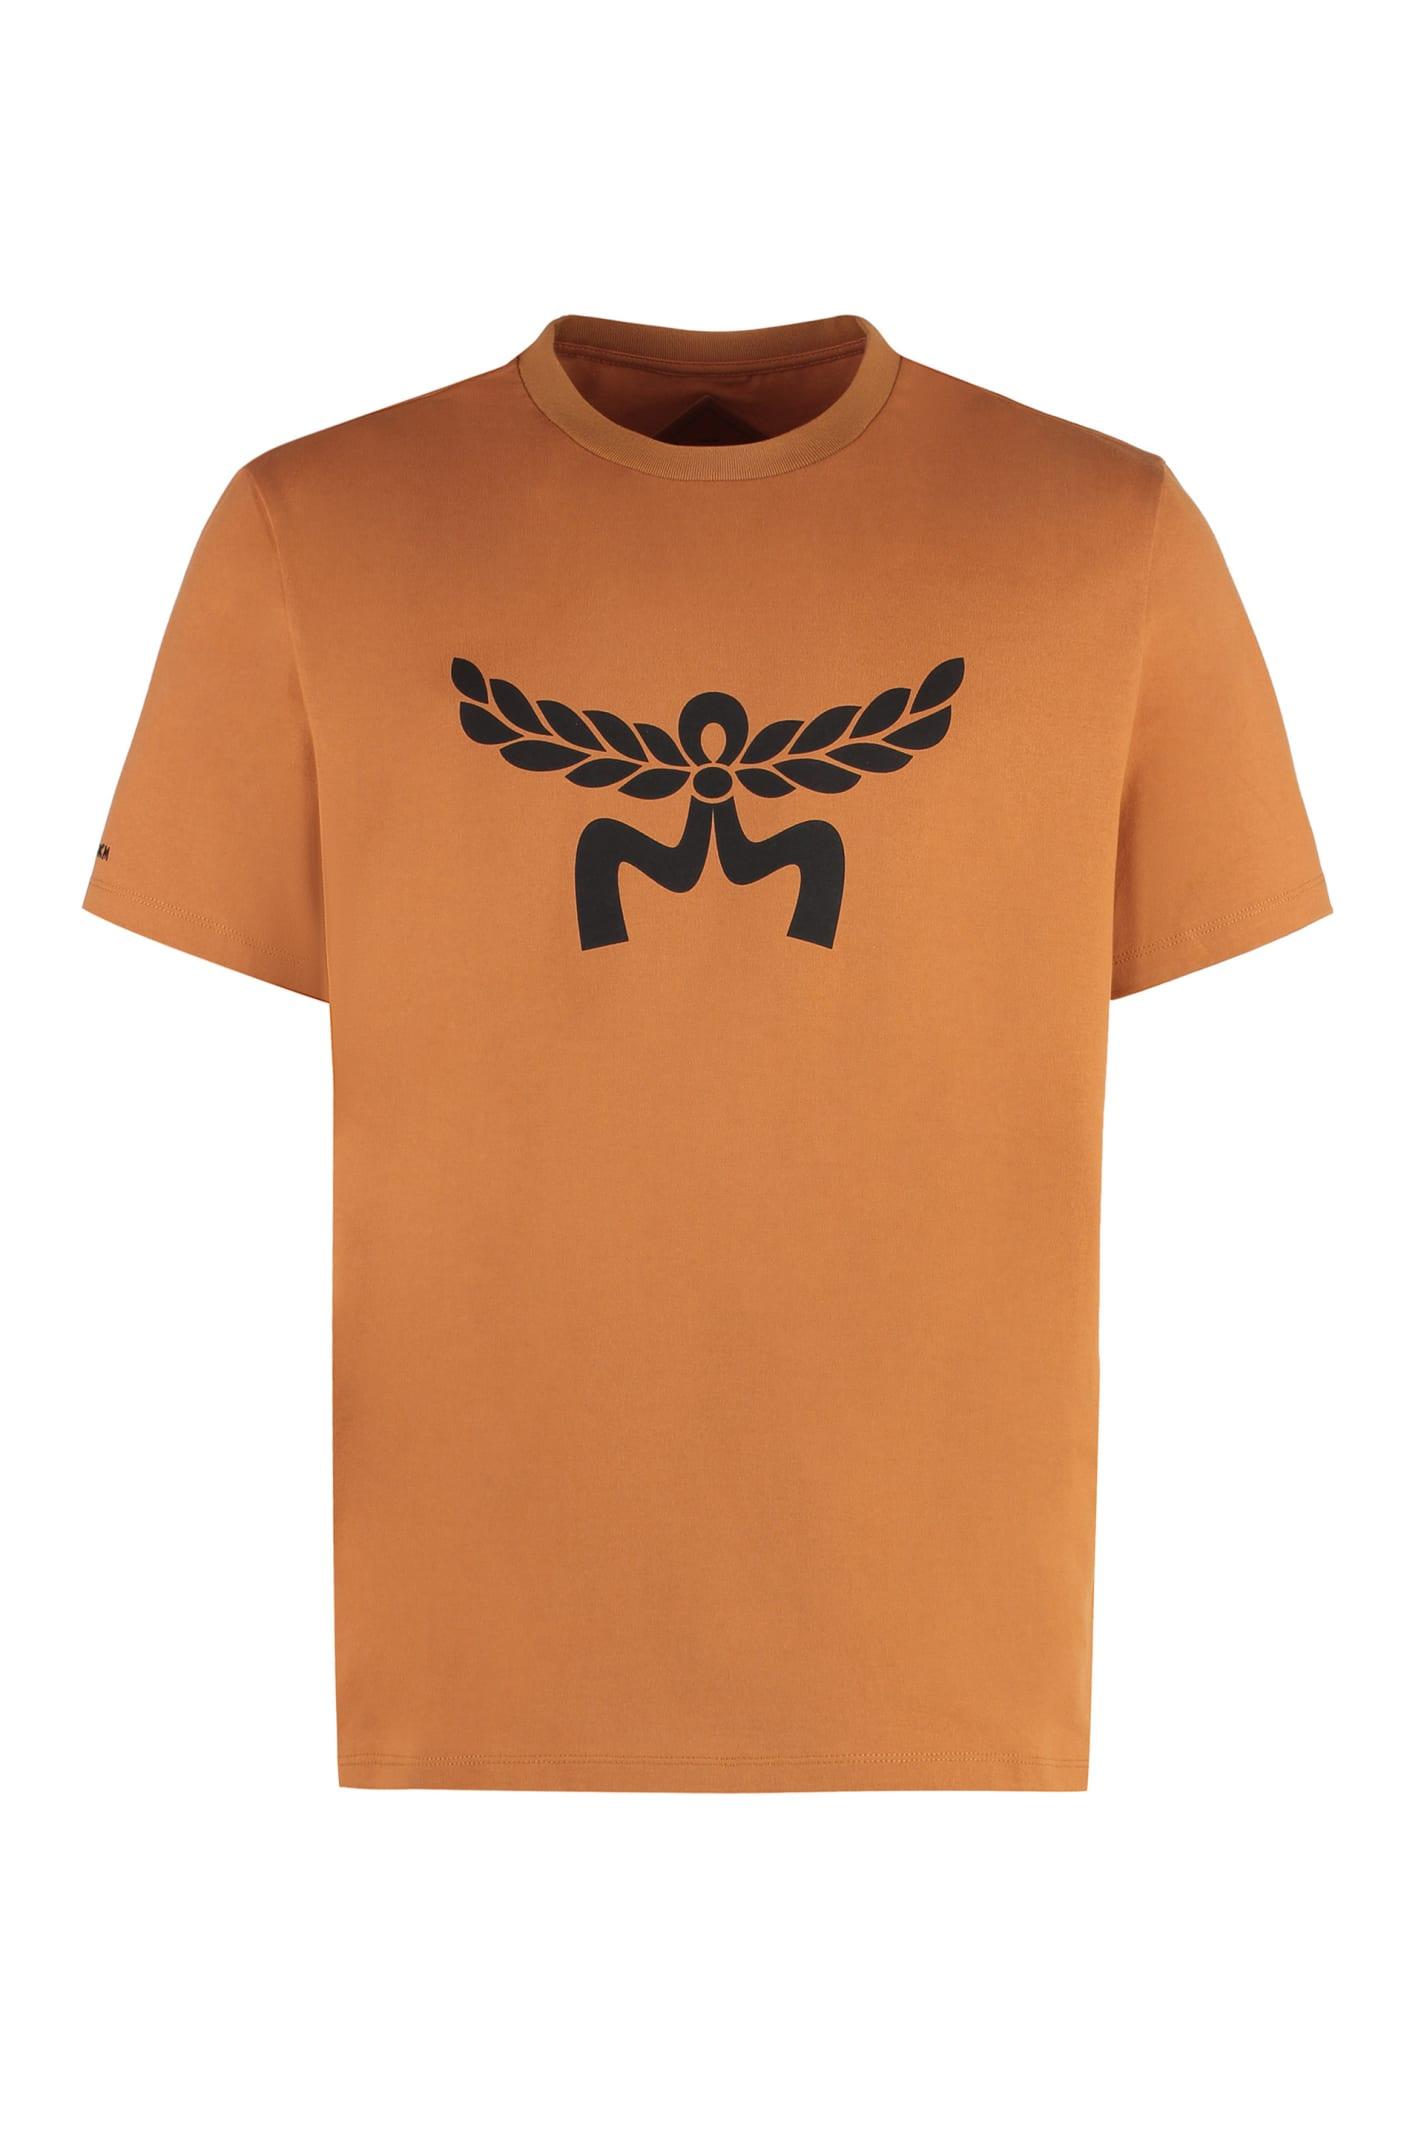 MCM Cotton Crew-neck T-shirt in Orange for Men | Lyst